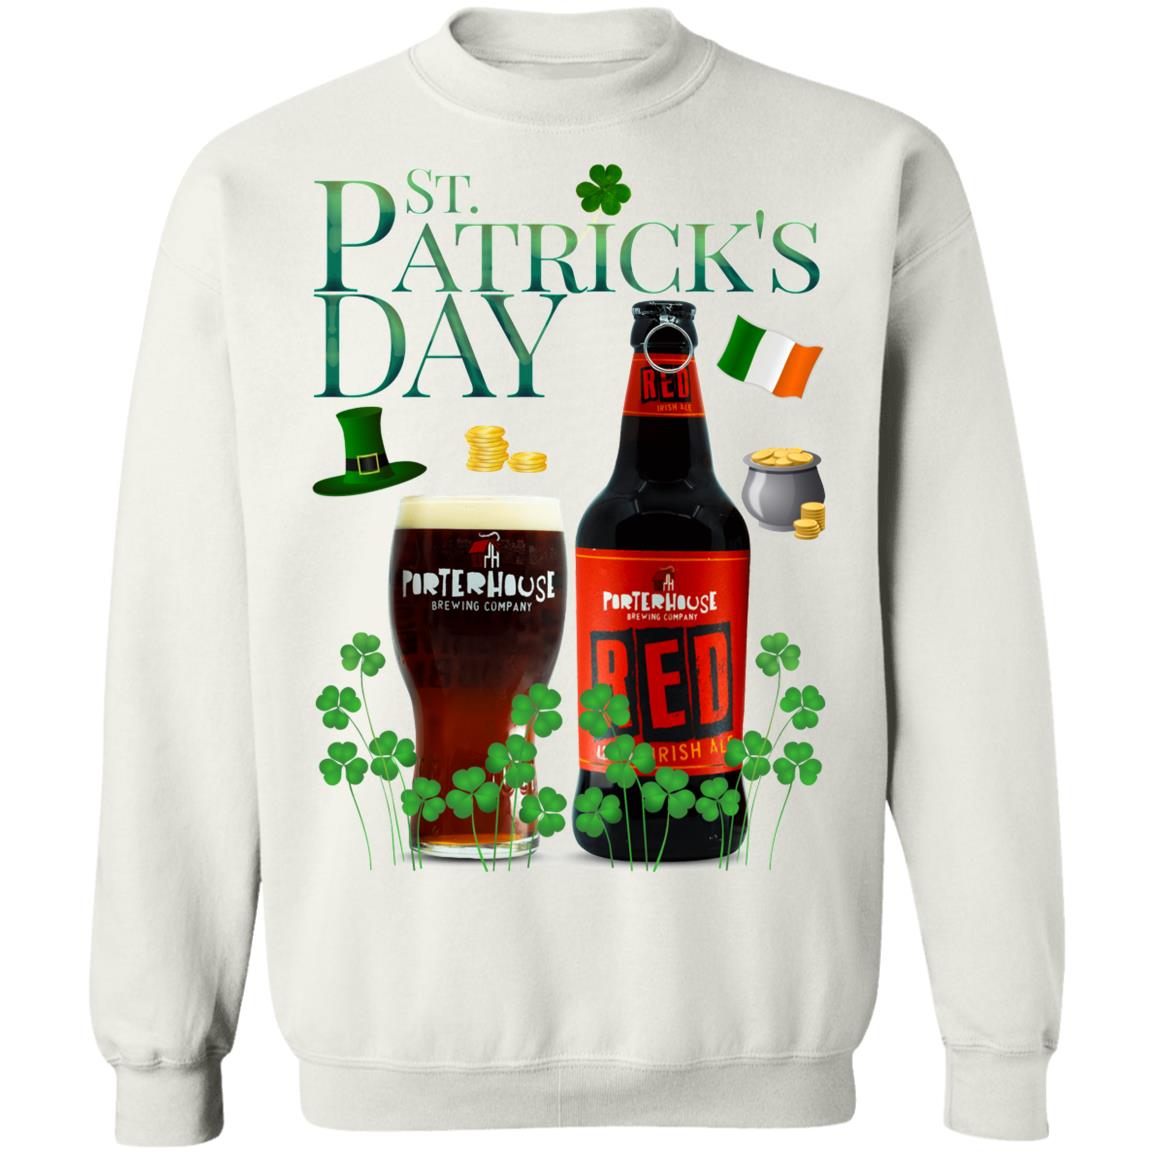 St. Patrick's Day Porterhouse Red Irish Ale Beer Shirt Long Sleeve Hoodie